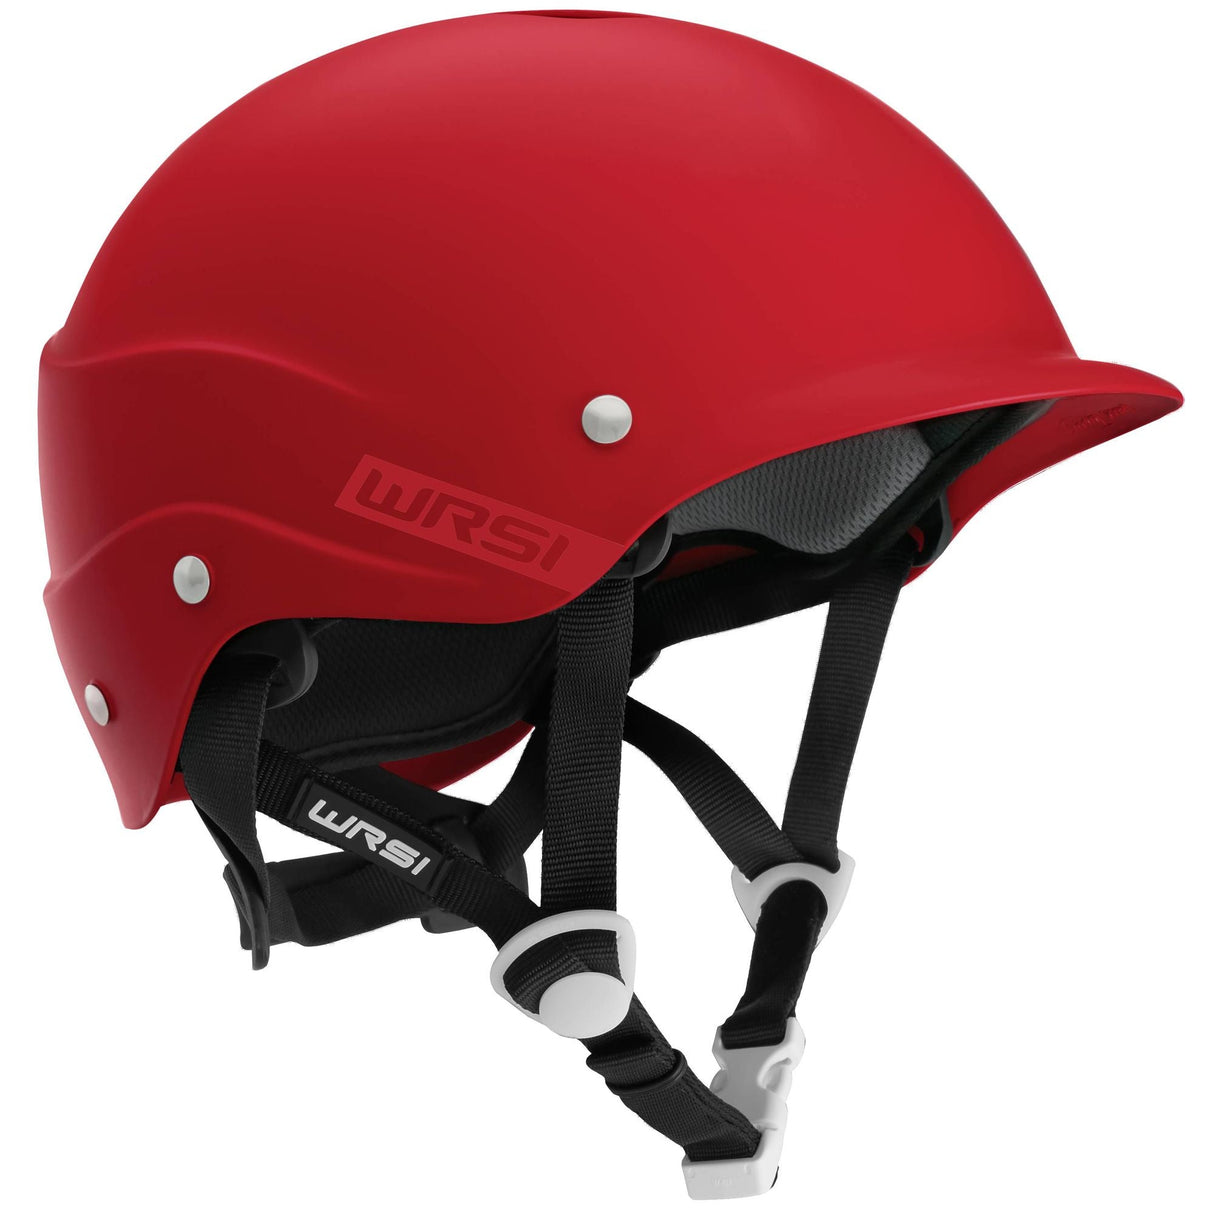 NRS, Inc - WRSI Current Helmet - Headwaters Adventure Co